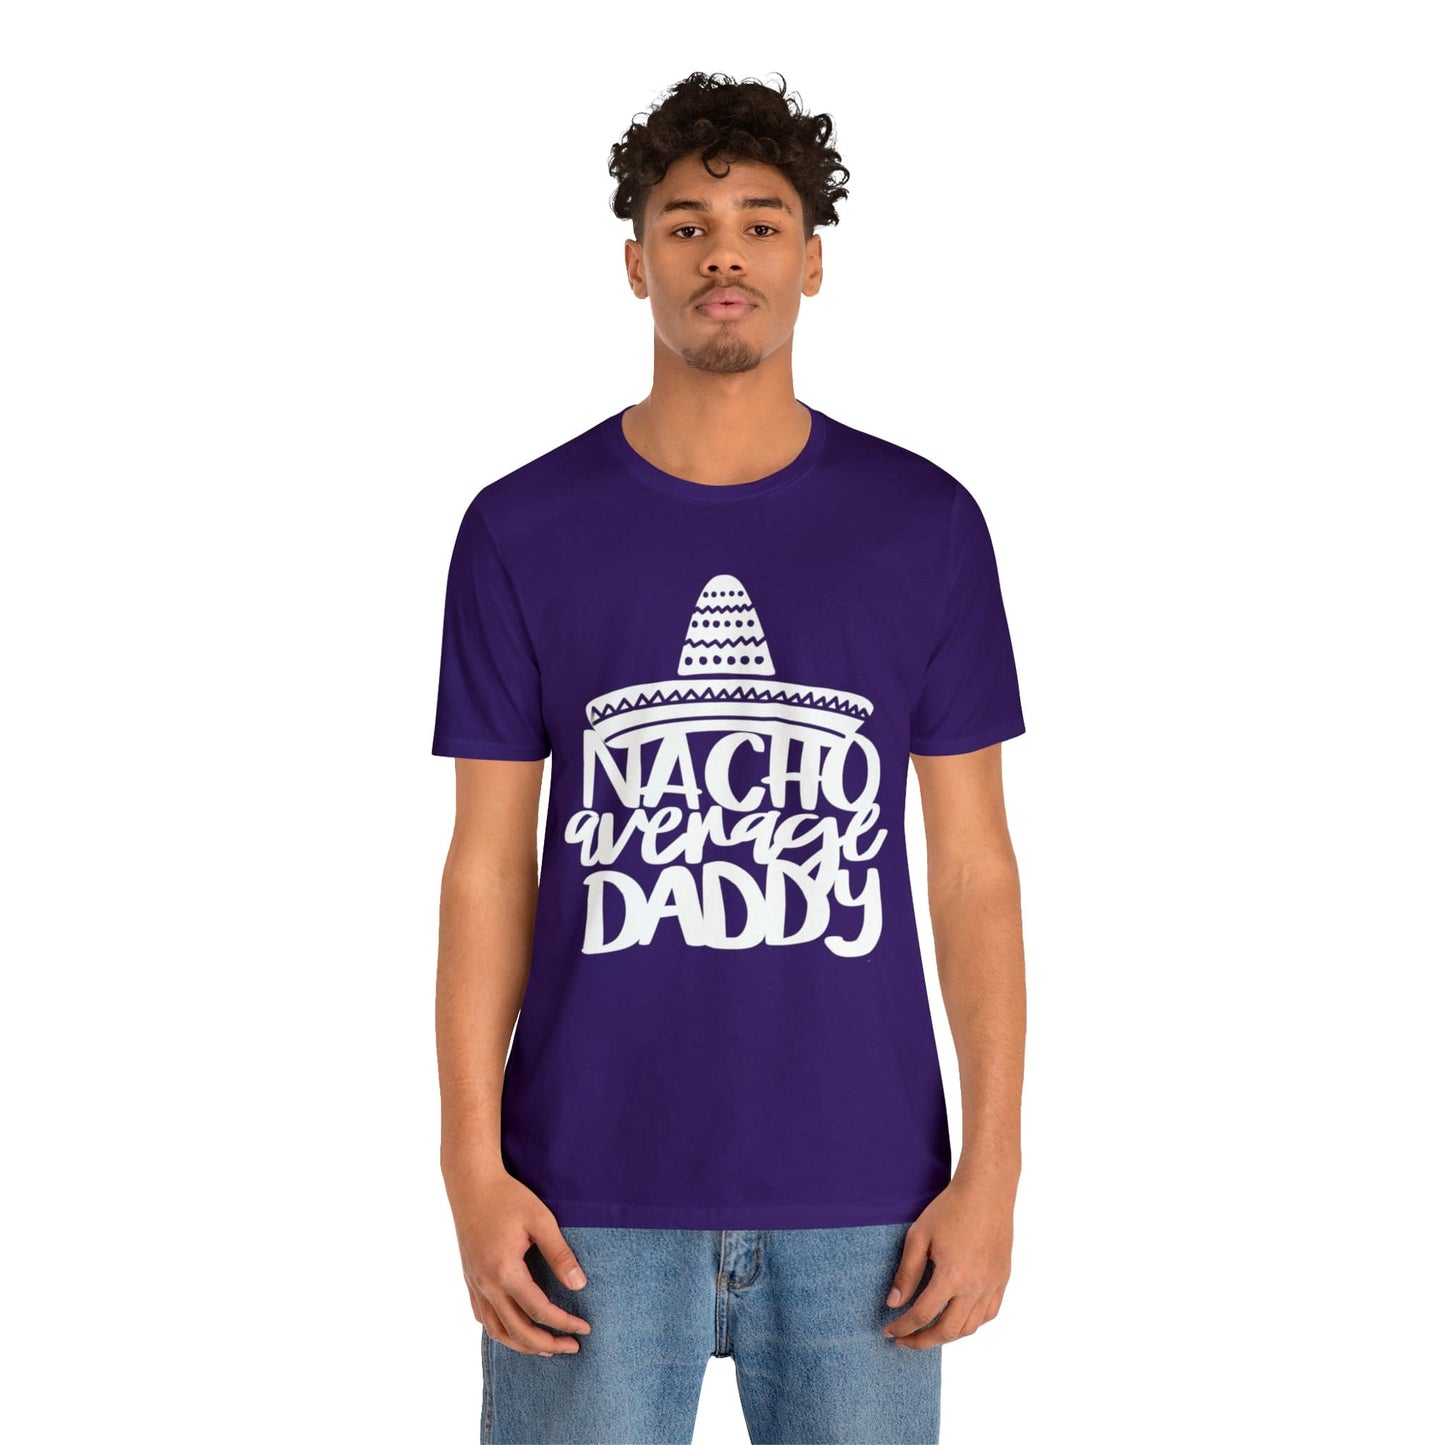 Nacho Average Daddy - Father's Day T-Shirt